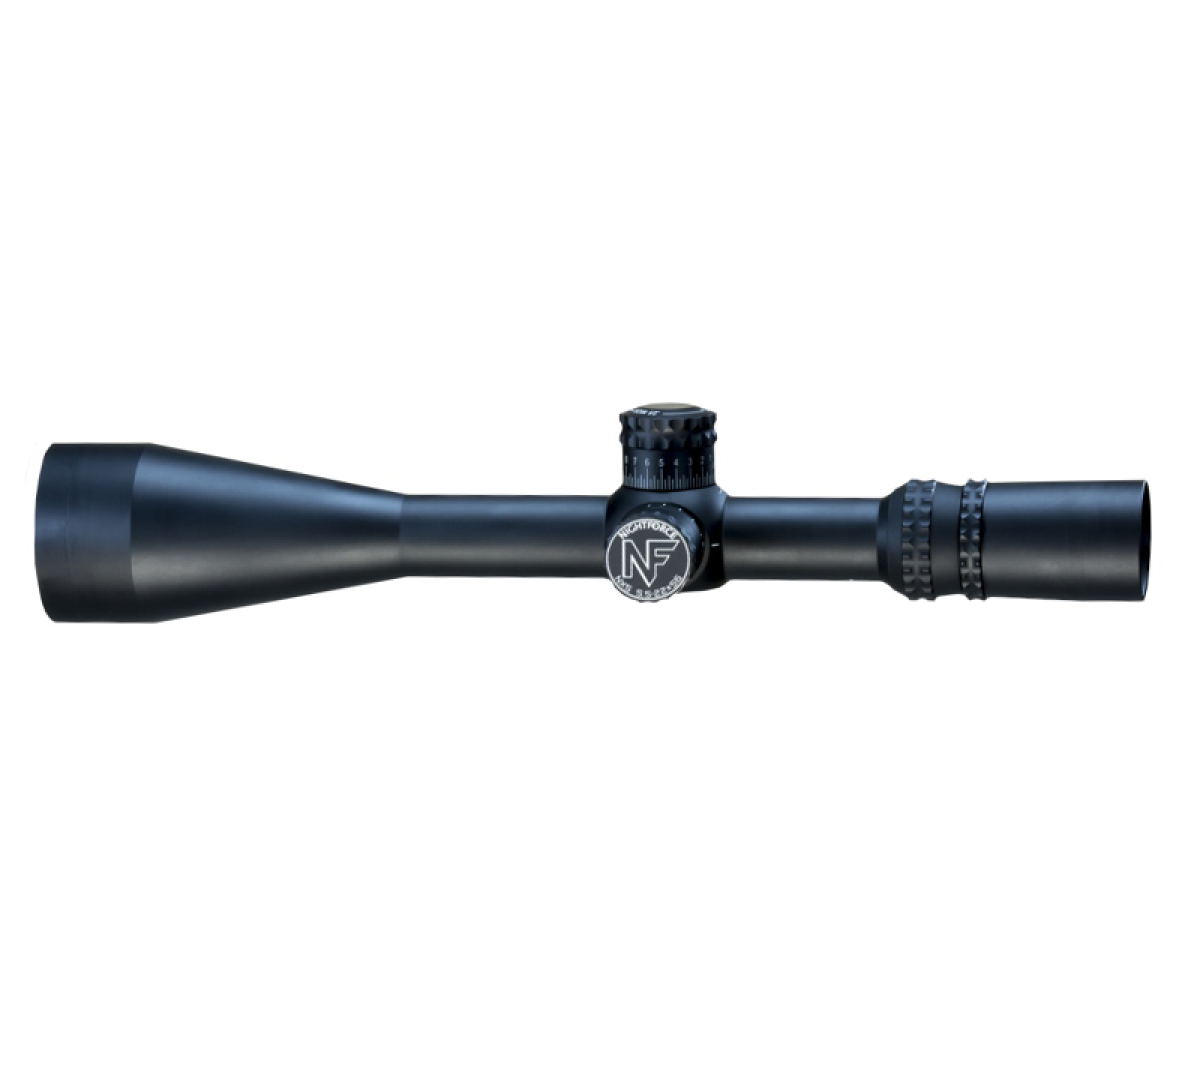 Nightforce NXS 5.5-22x56 ZeroStop Mil-R Riflescope (C528)